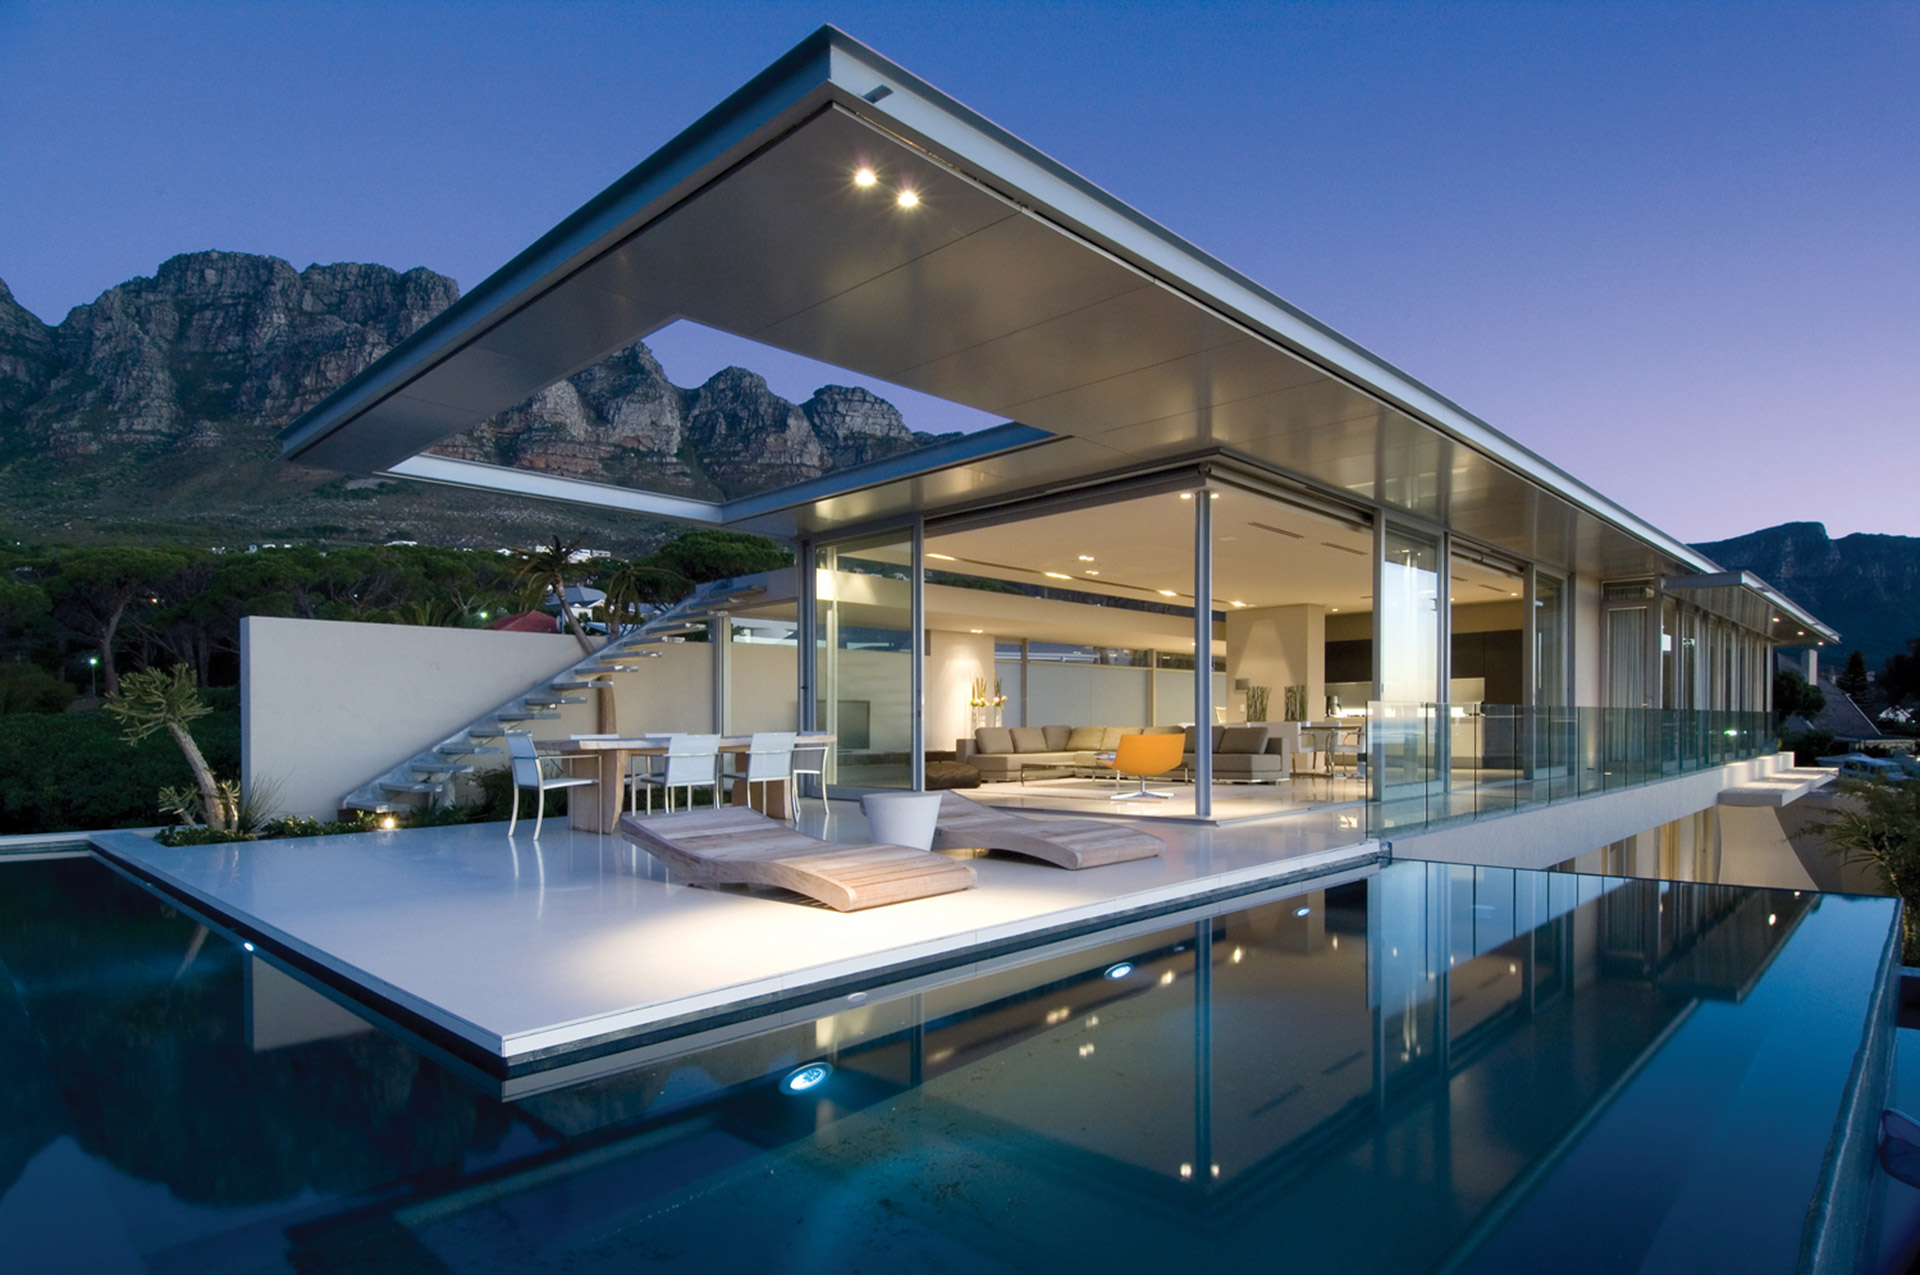 General 1920x1275 Cape Town mountains house swimming pool modern lounge reflection Twelve Apostles Table Mountain